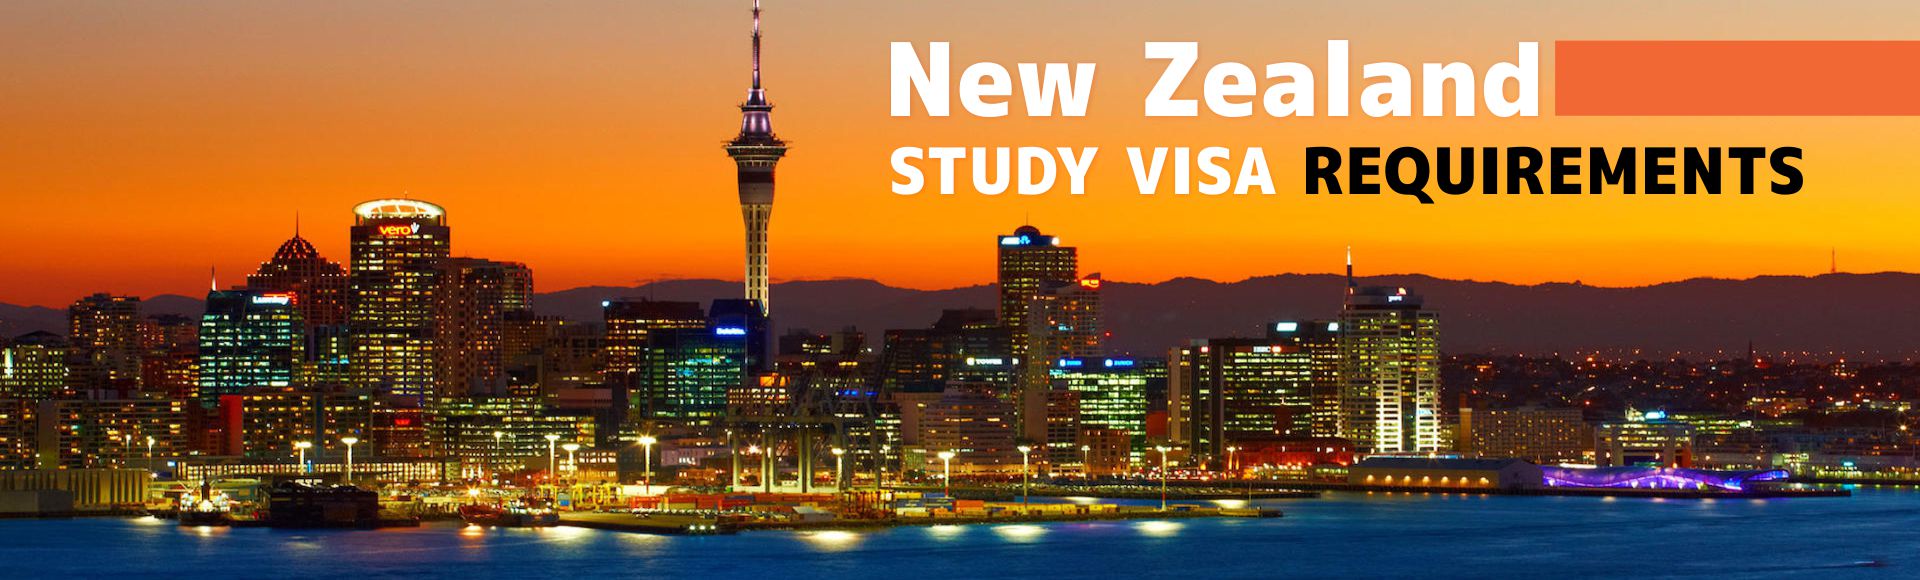 New Zealand Study Visa Requirements